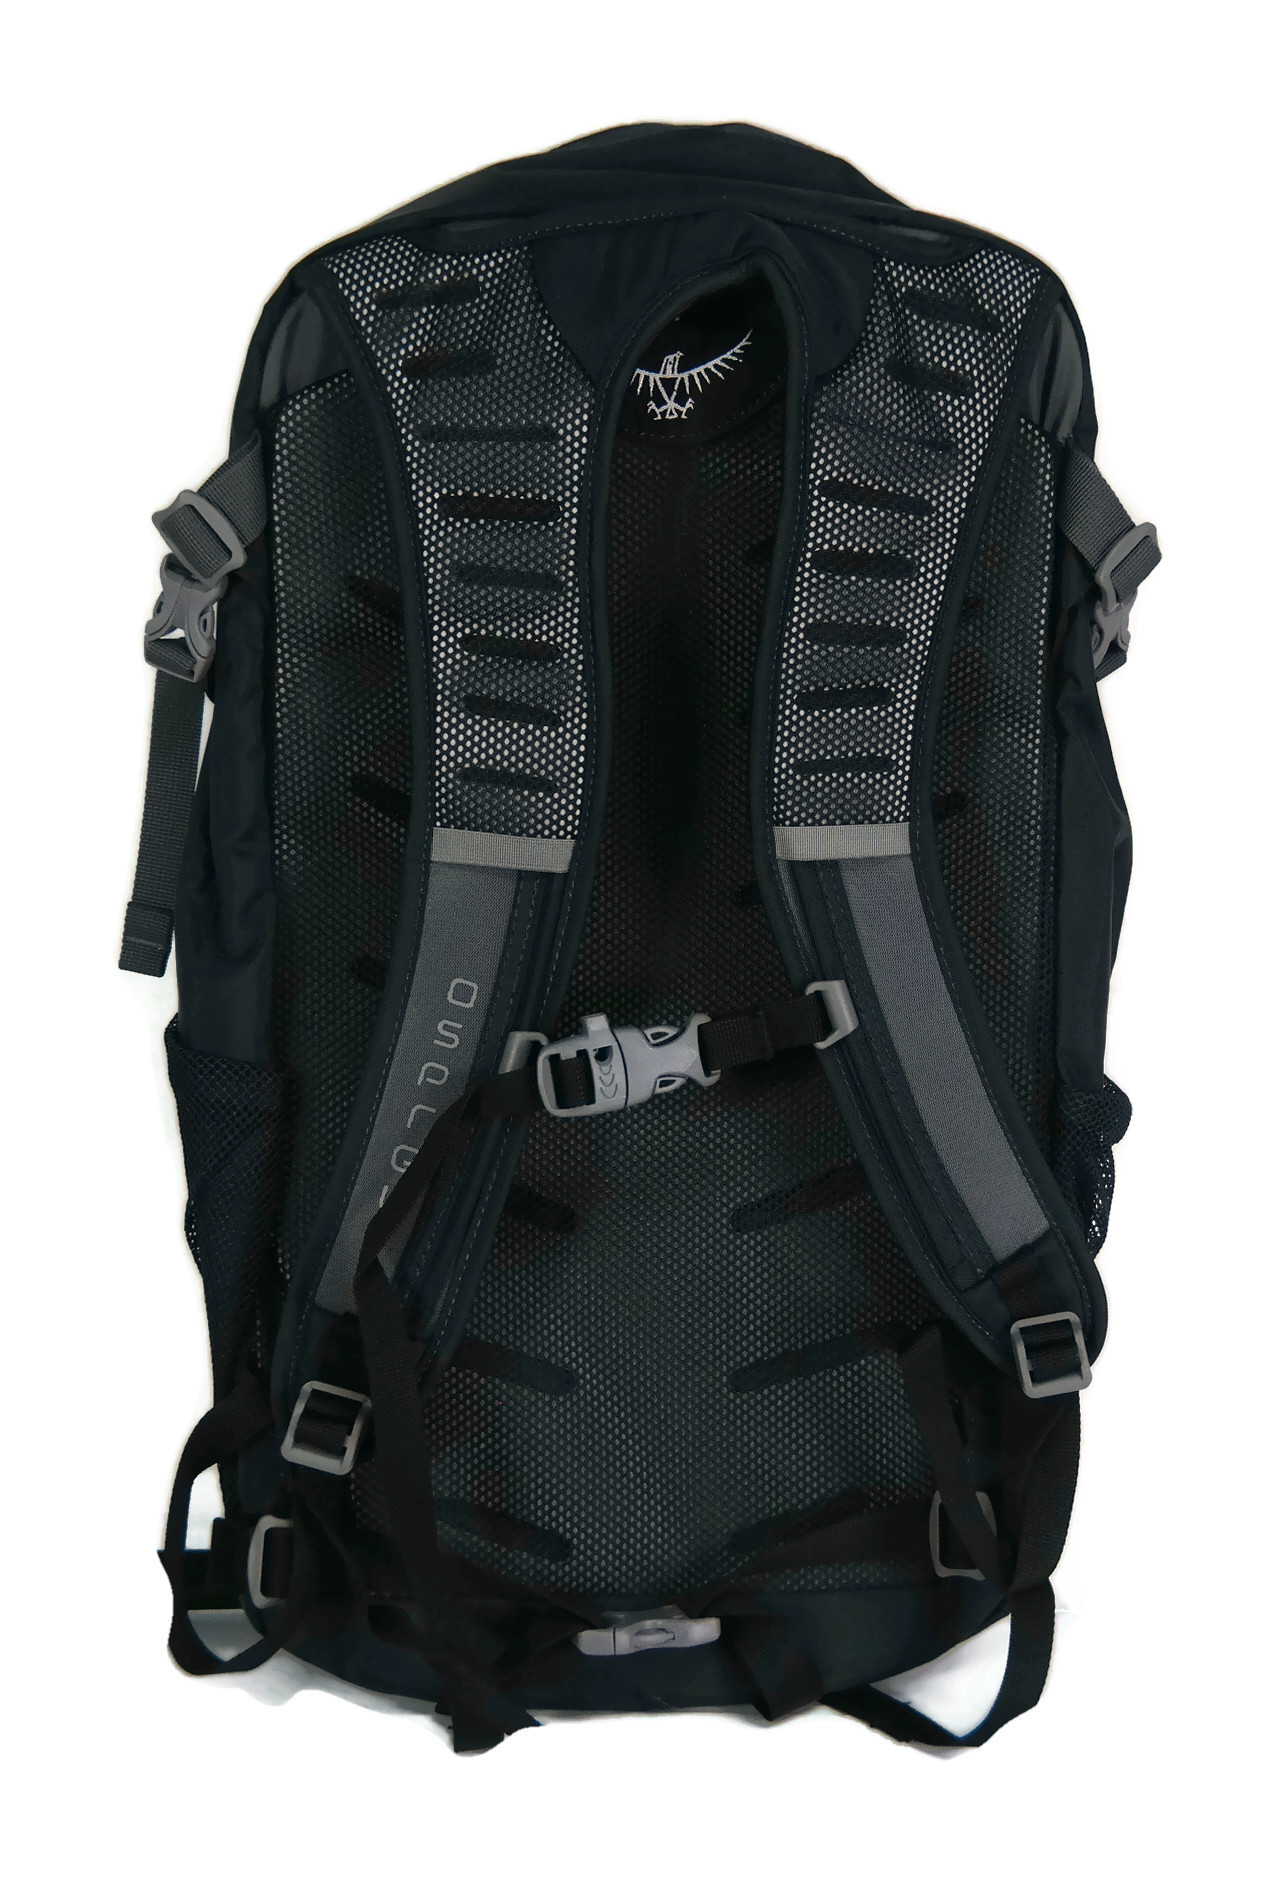 osprey daylite backpack